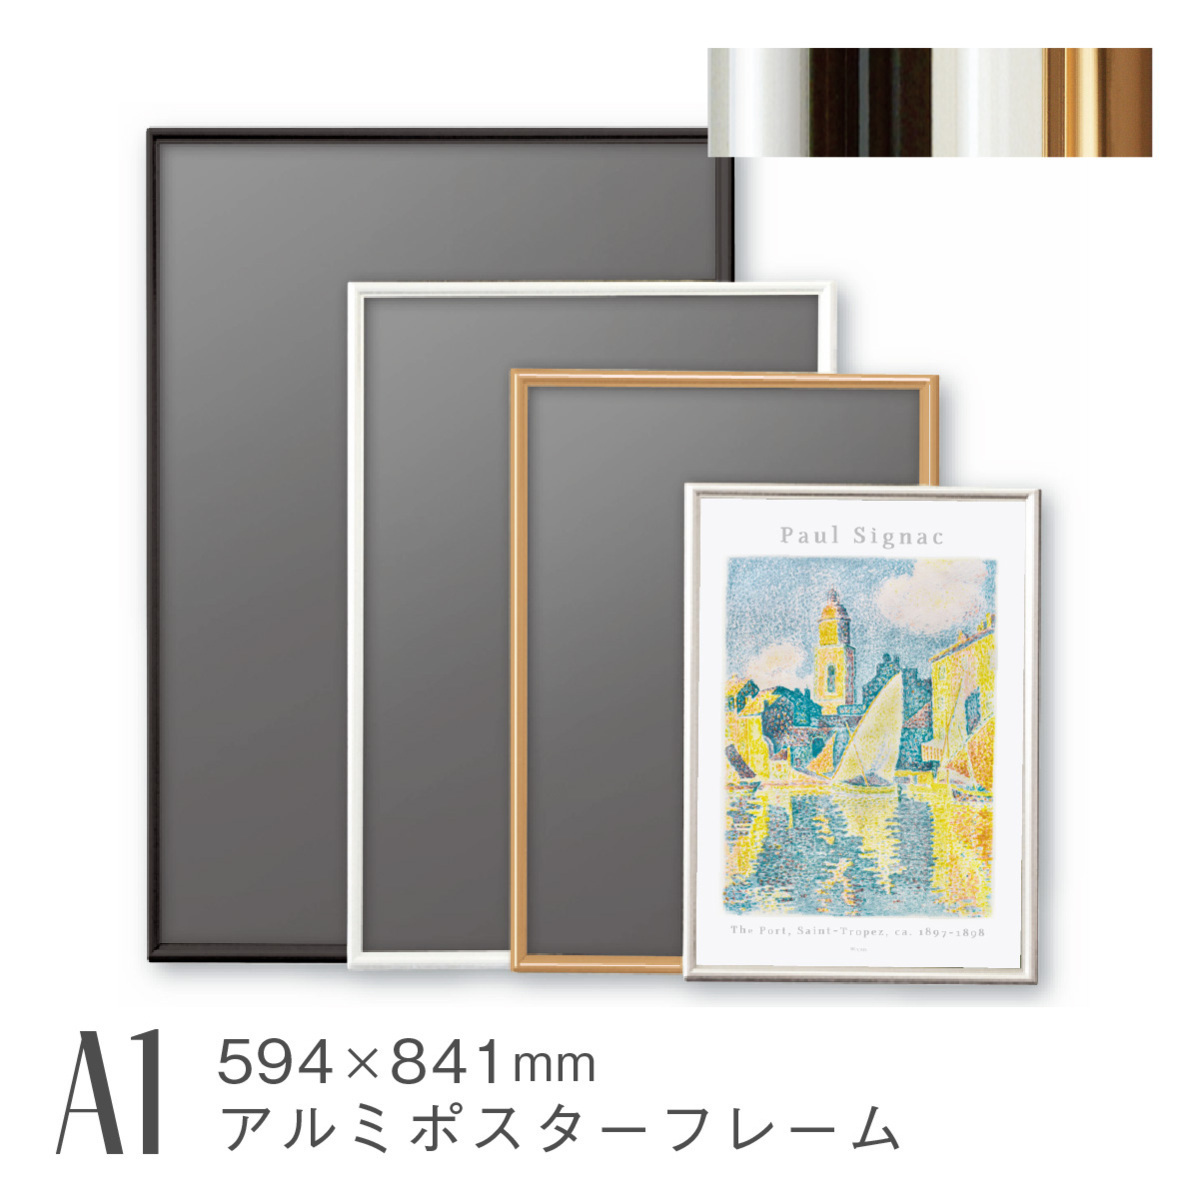 A1 形黑色海报框铝制绘画艺术画框大号超大号壁挂式轻质 AR-SH-A1, 美术用品, 镜框, 海报框架